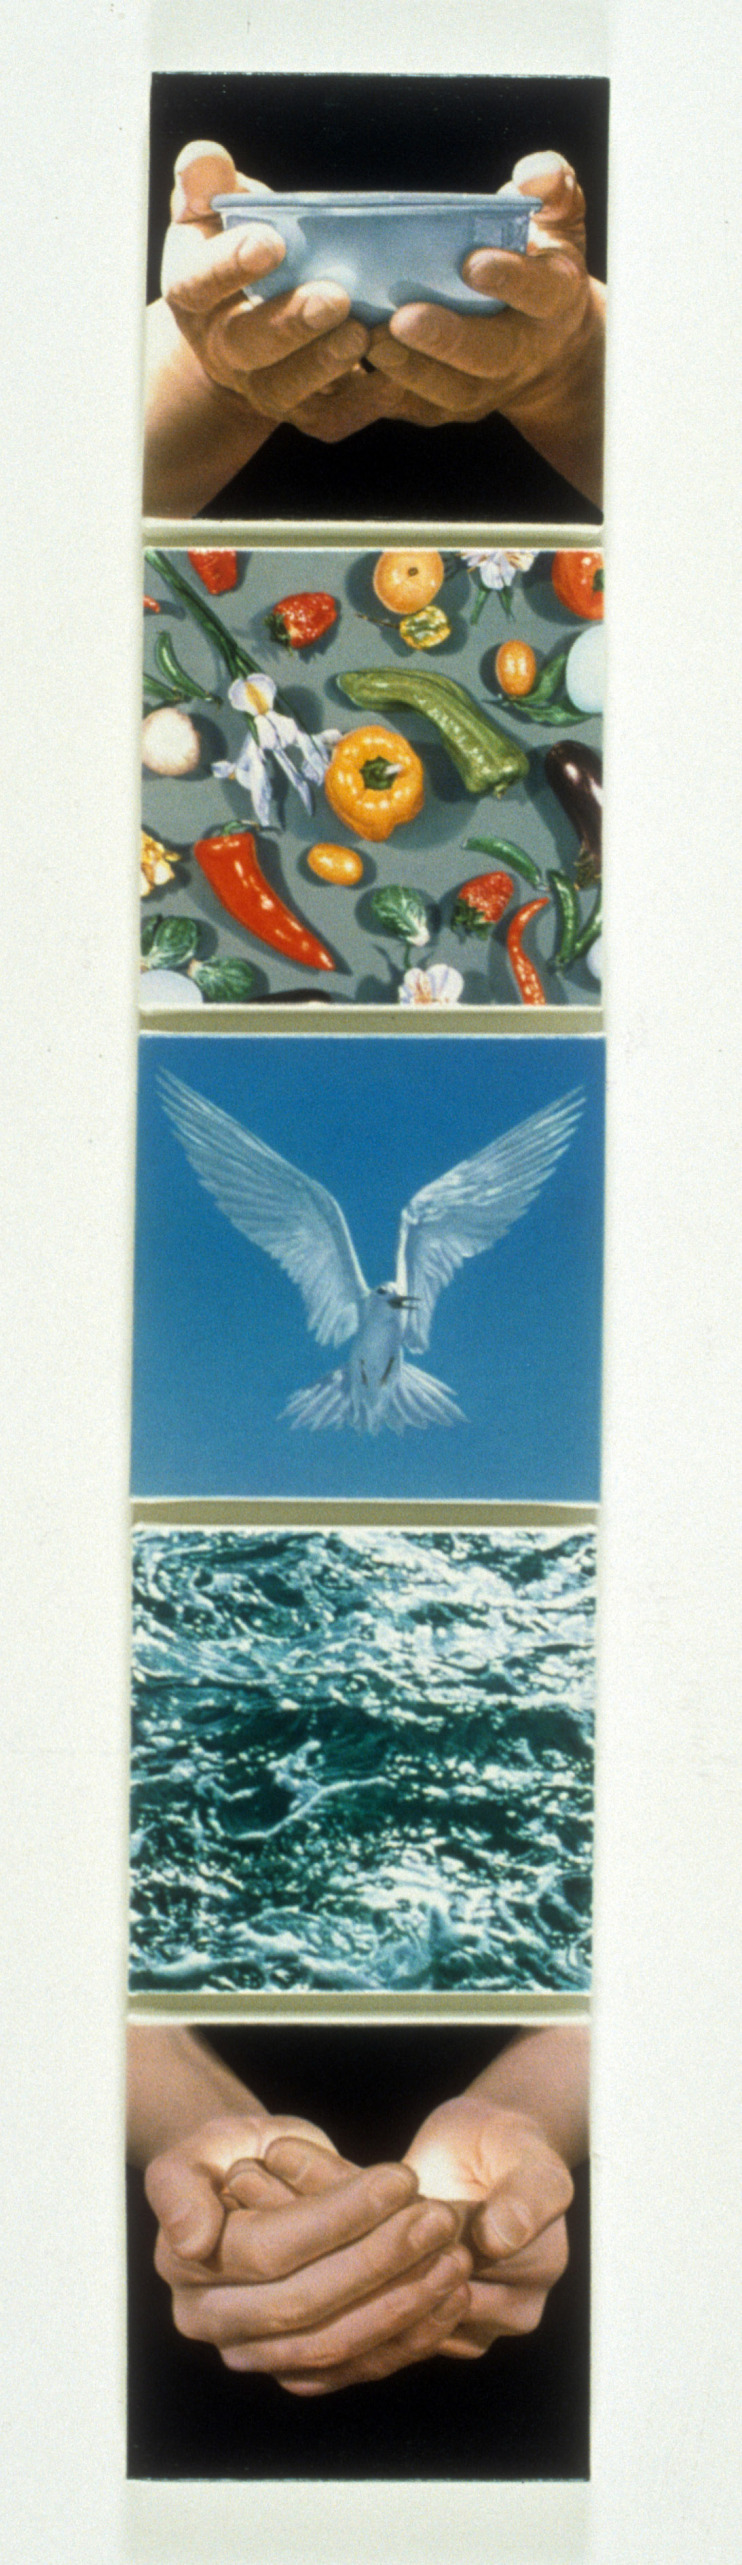 daphnis and chloe 1995 copy.jpg